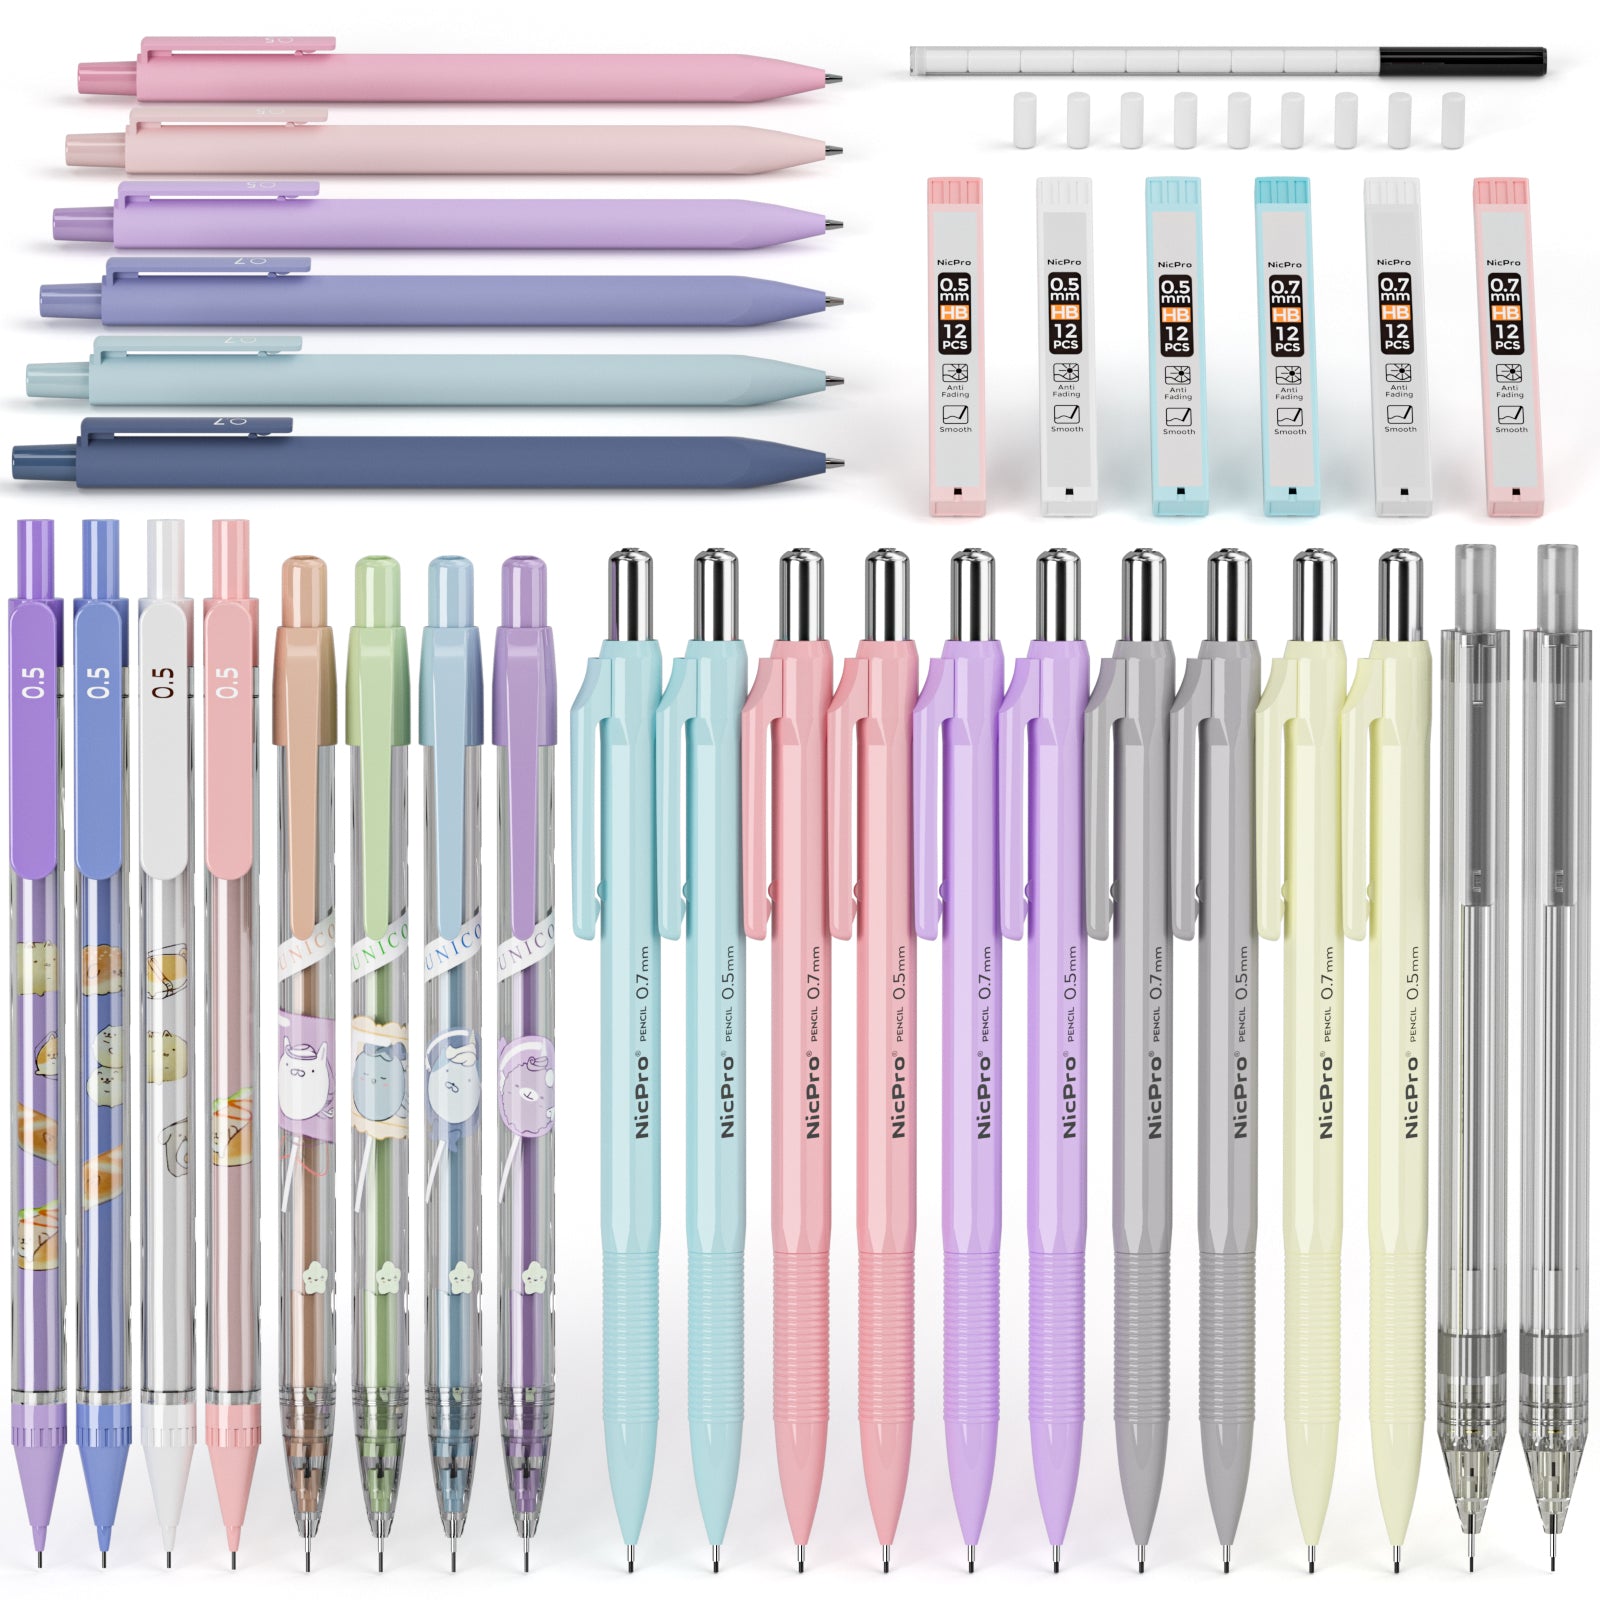 H&B 26pcs Professional Drawing Sketch Pencil Kit Set Including